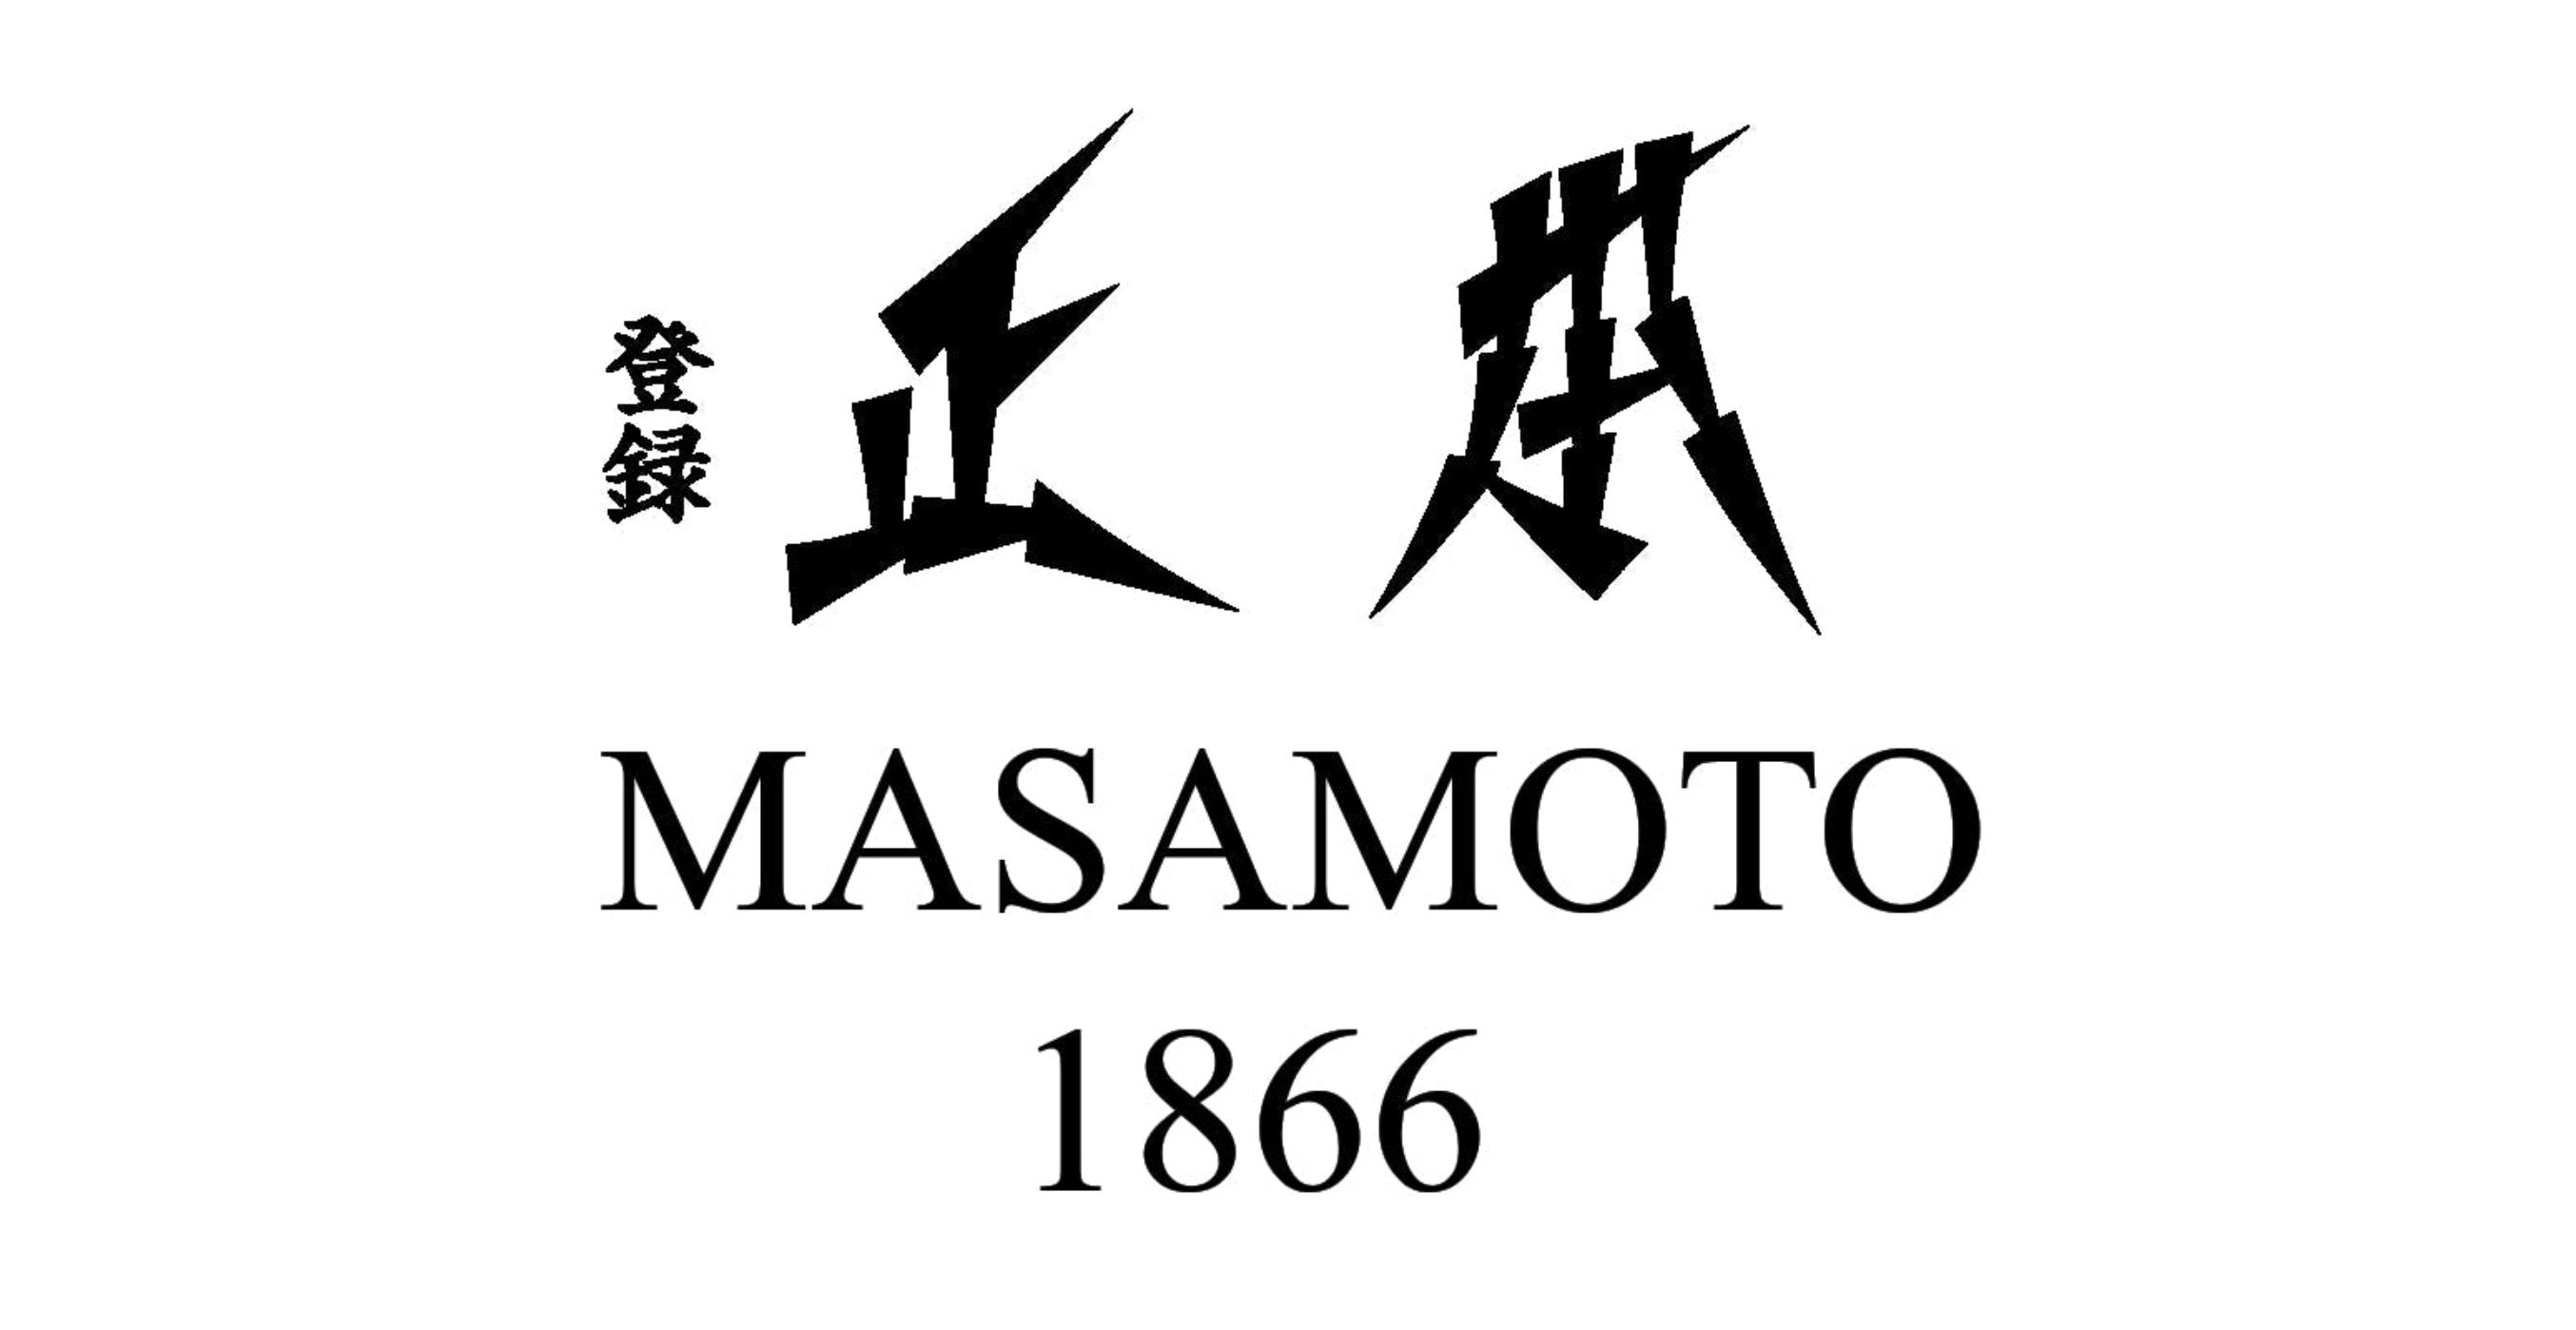 Masamoto logo